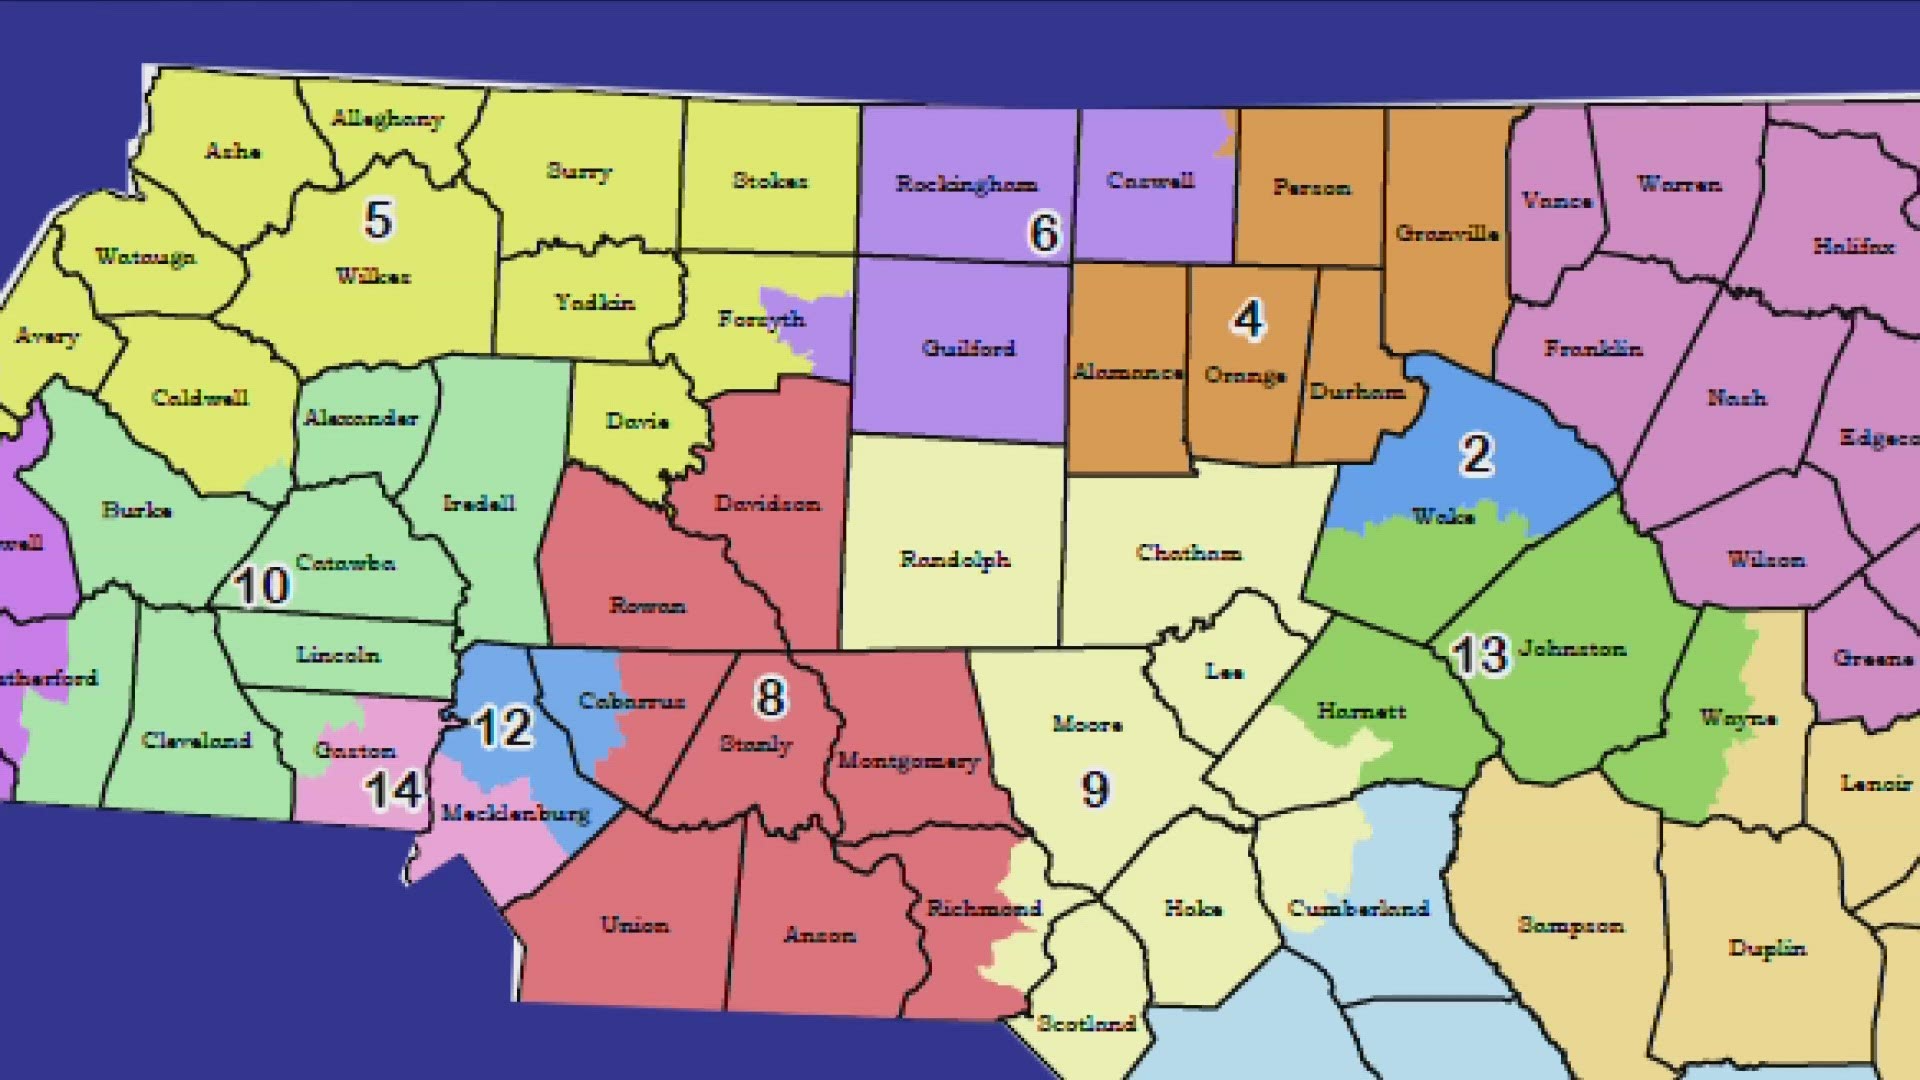 North Carolina Republicans pitch new congressional maps